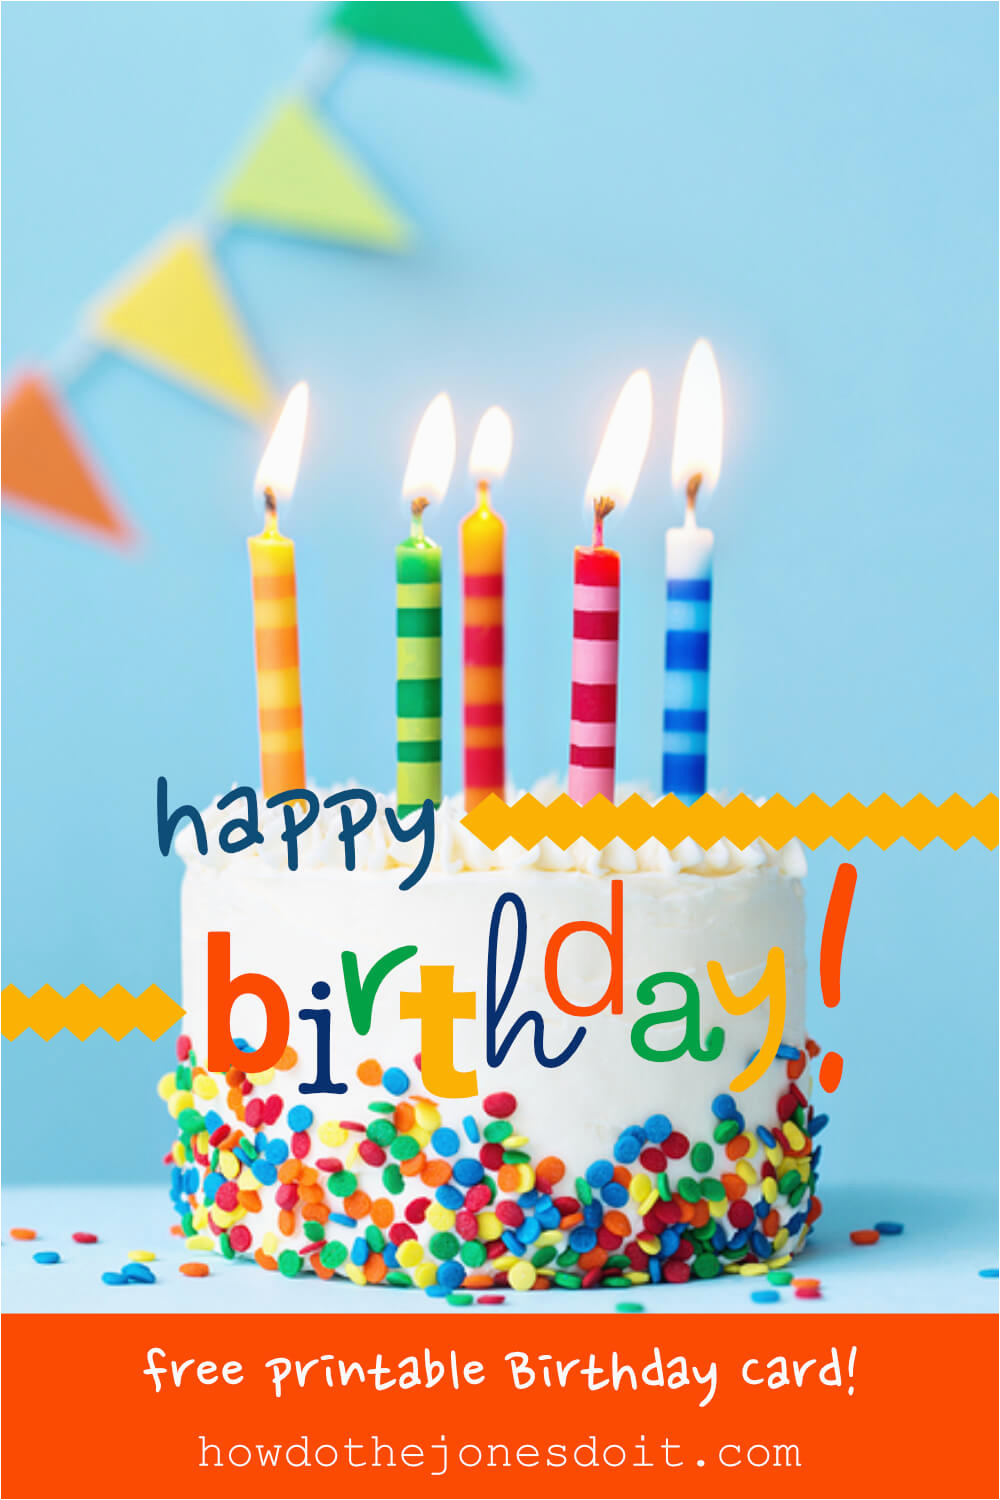 create-a-birthday-card-online-free-printable-happy-birthday-card-free